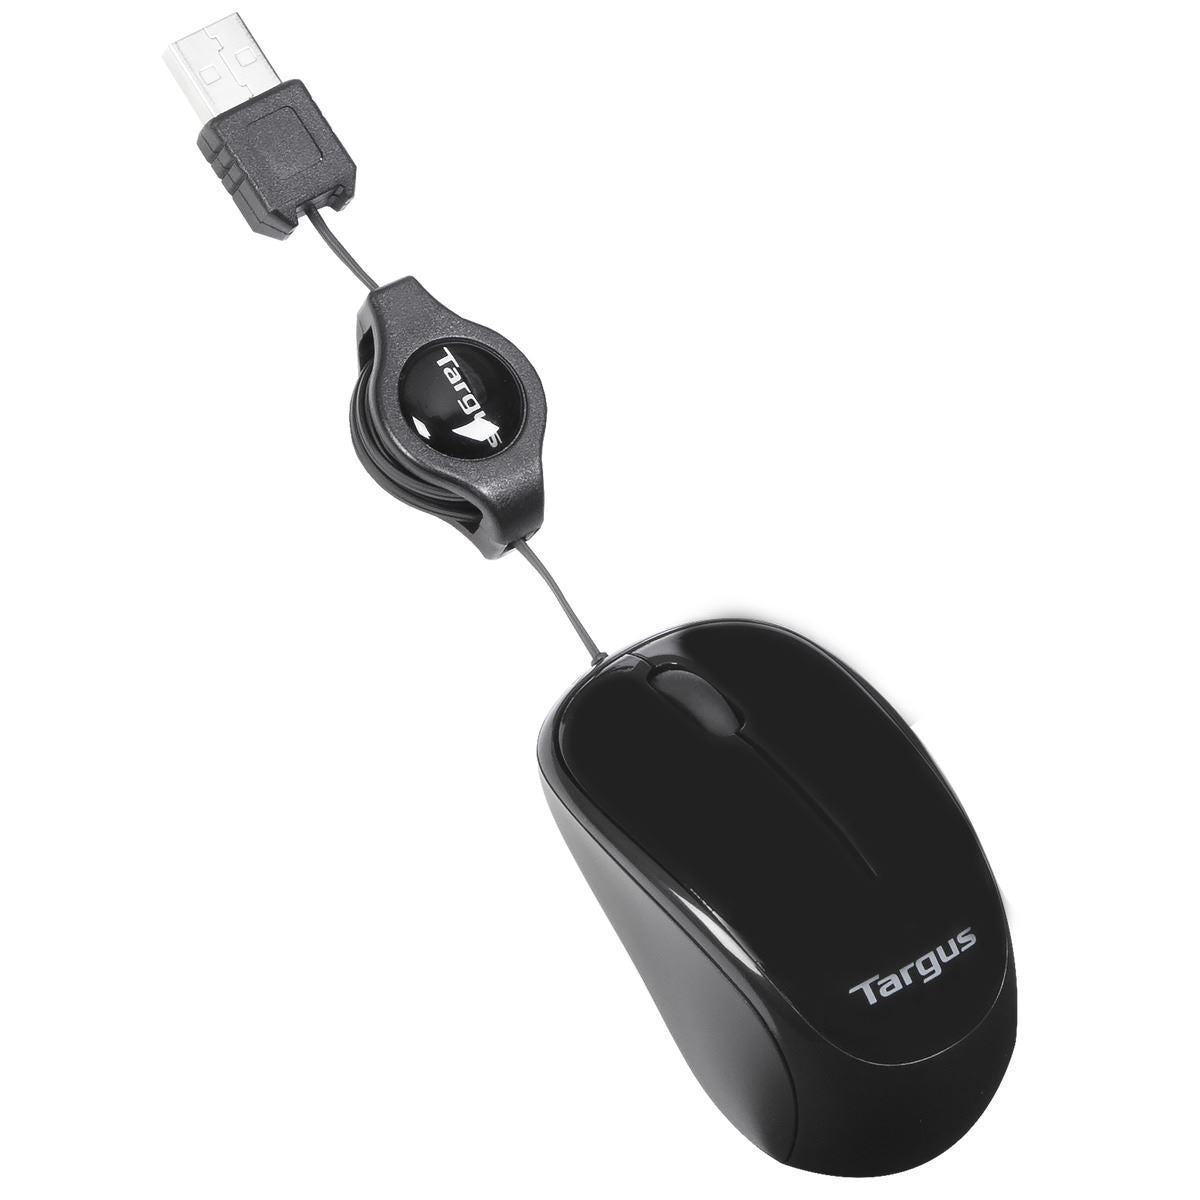 Targus AMU75EU mouse Travel Ambidextrous USB Type-A Blue Trace 1000 DPI